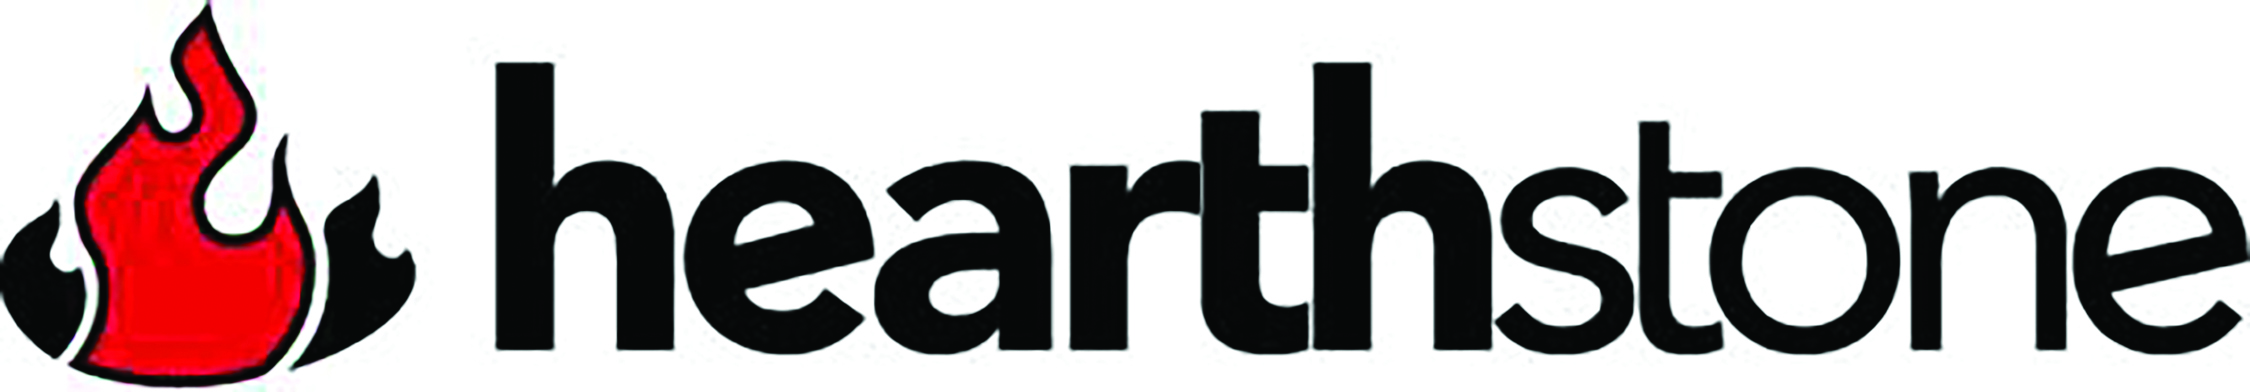 hearthstone-logo-plain540-326.jpg